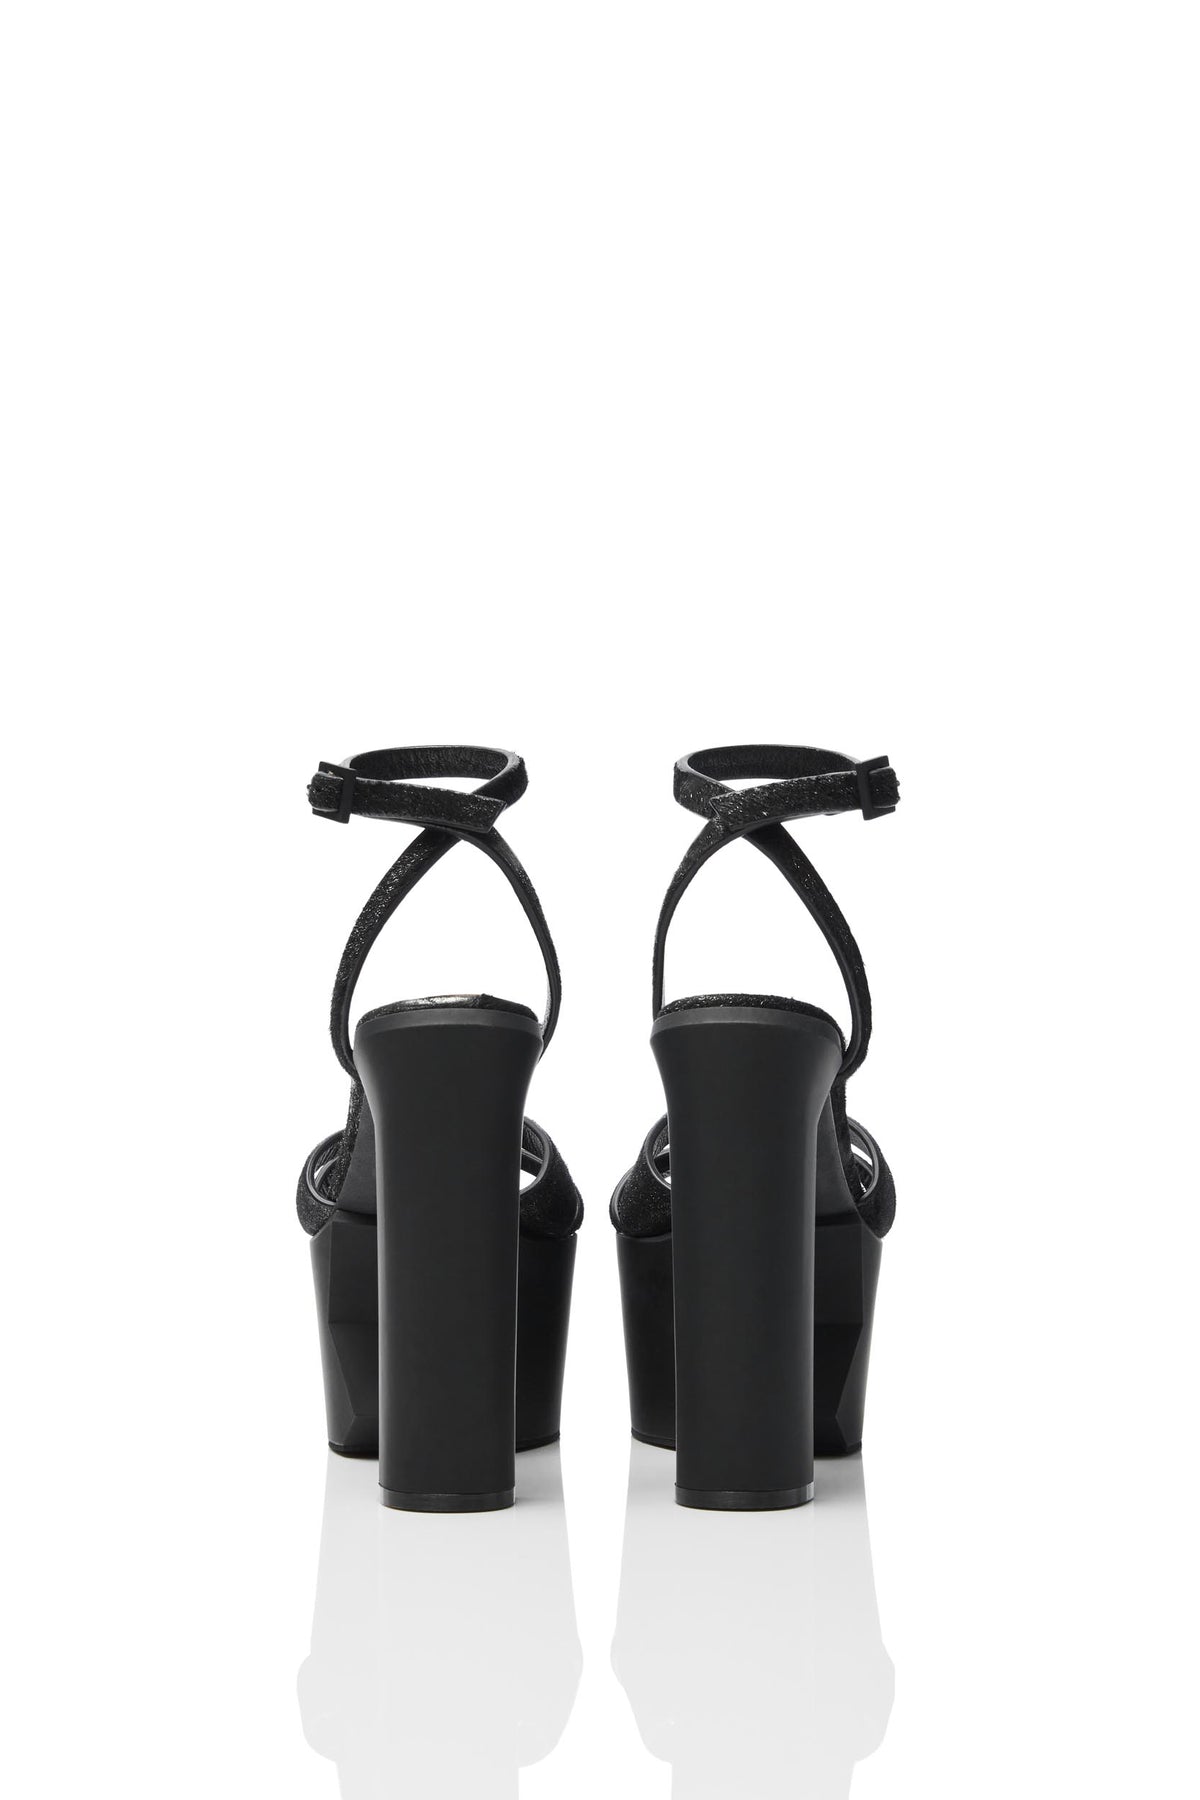 HAIKI 801 – Multi-band platform sandal with self-adjusting ankle strap. Made of Metallic Haircalf. 